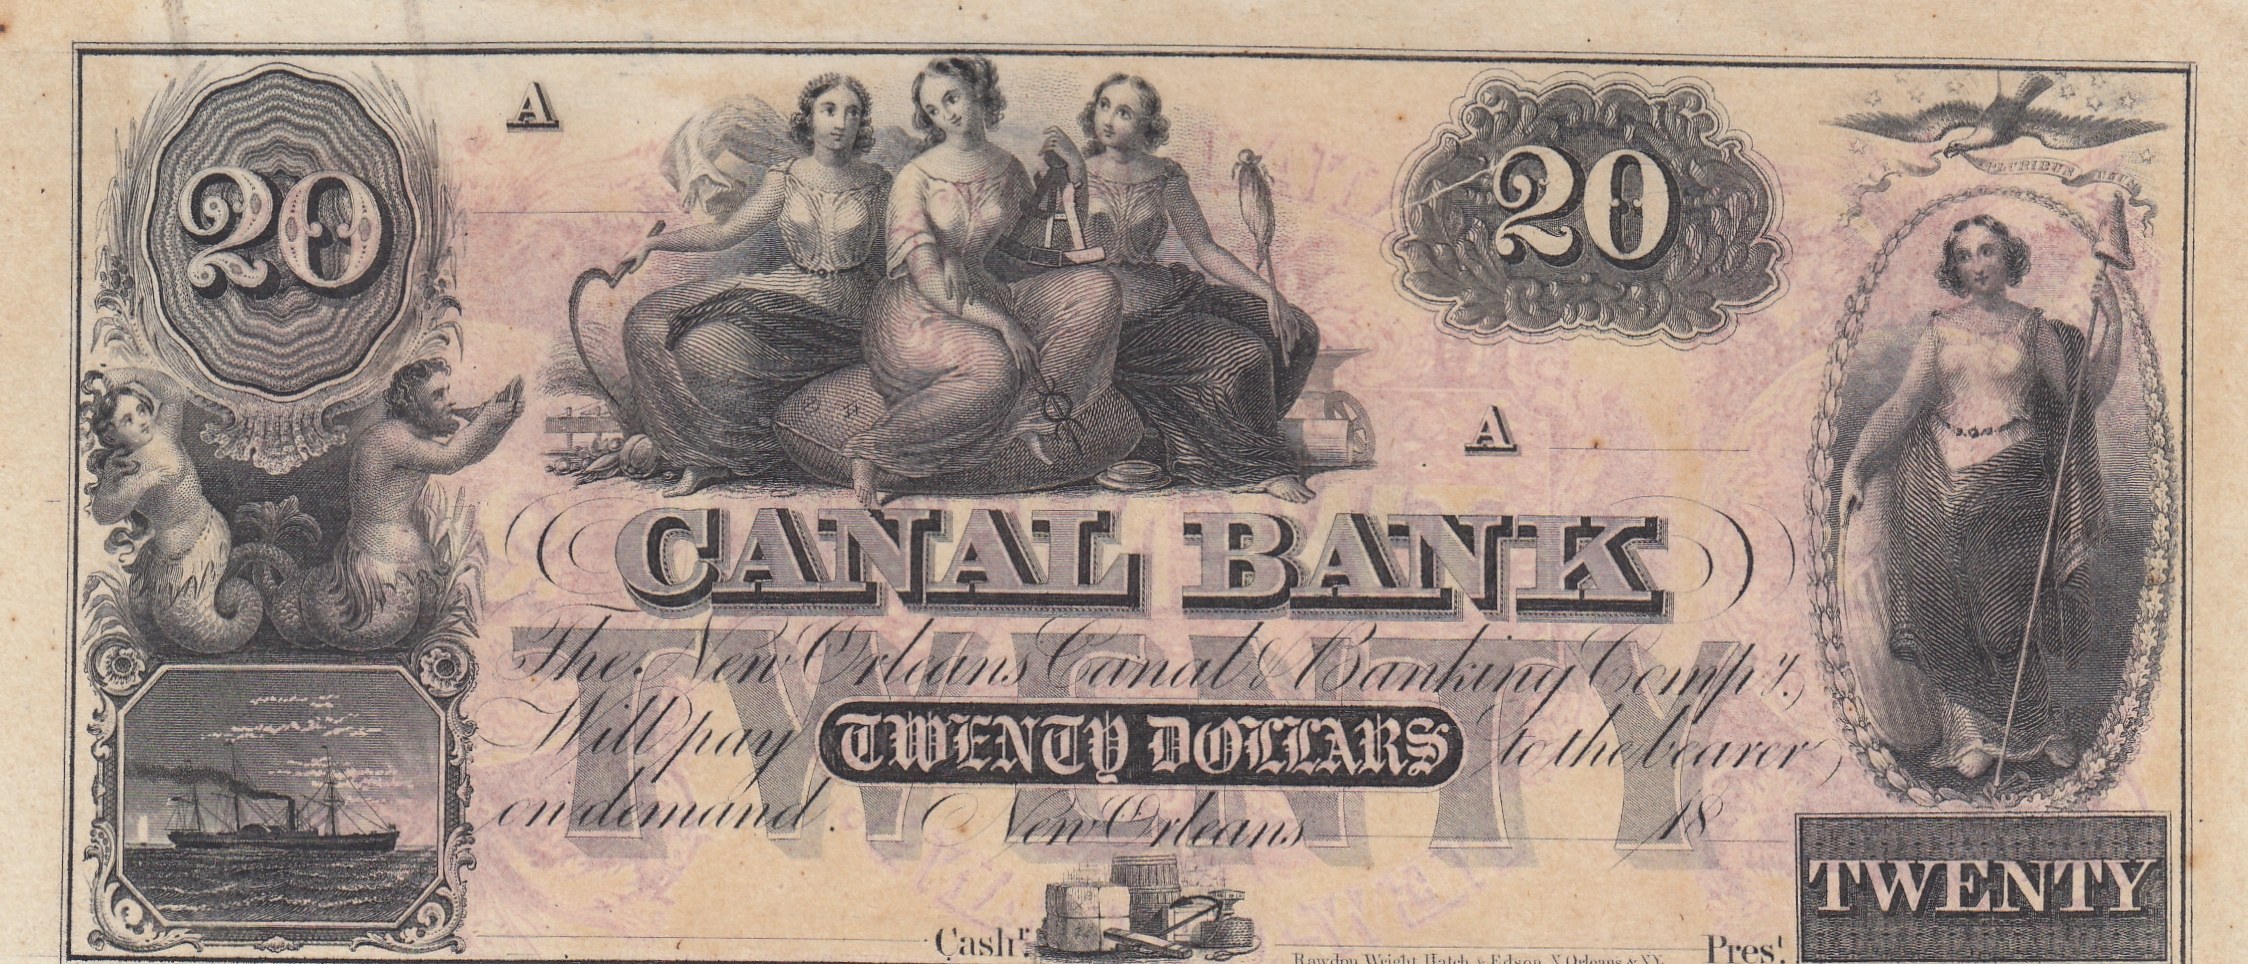 T me blank banknotes. Старые доллары. Банкноты США 20 века. Доллар США 20 века. Доллар 1800 года.